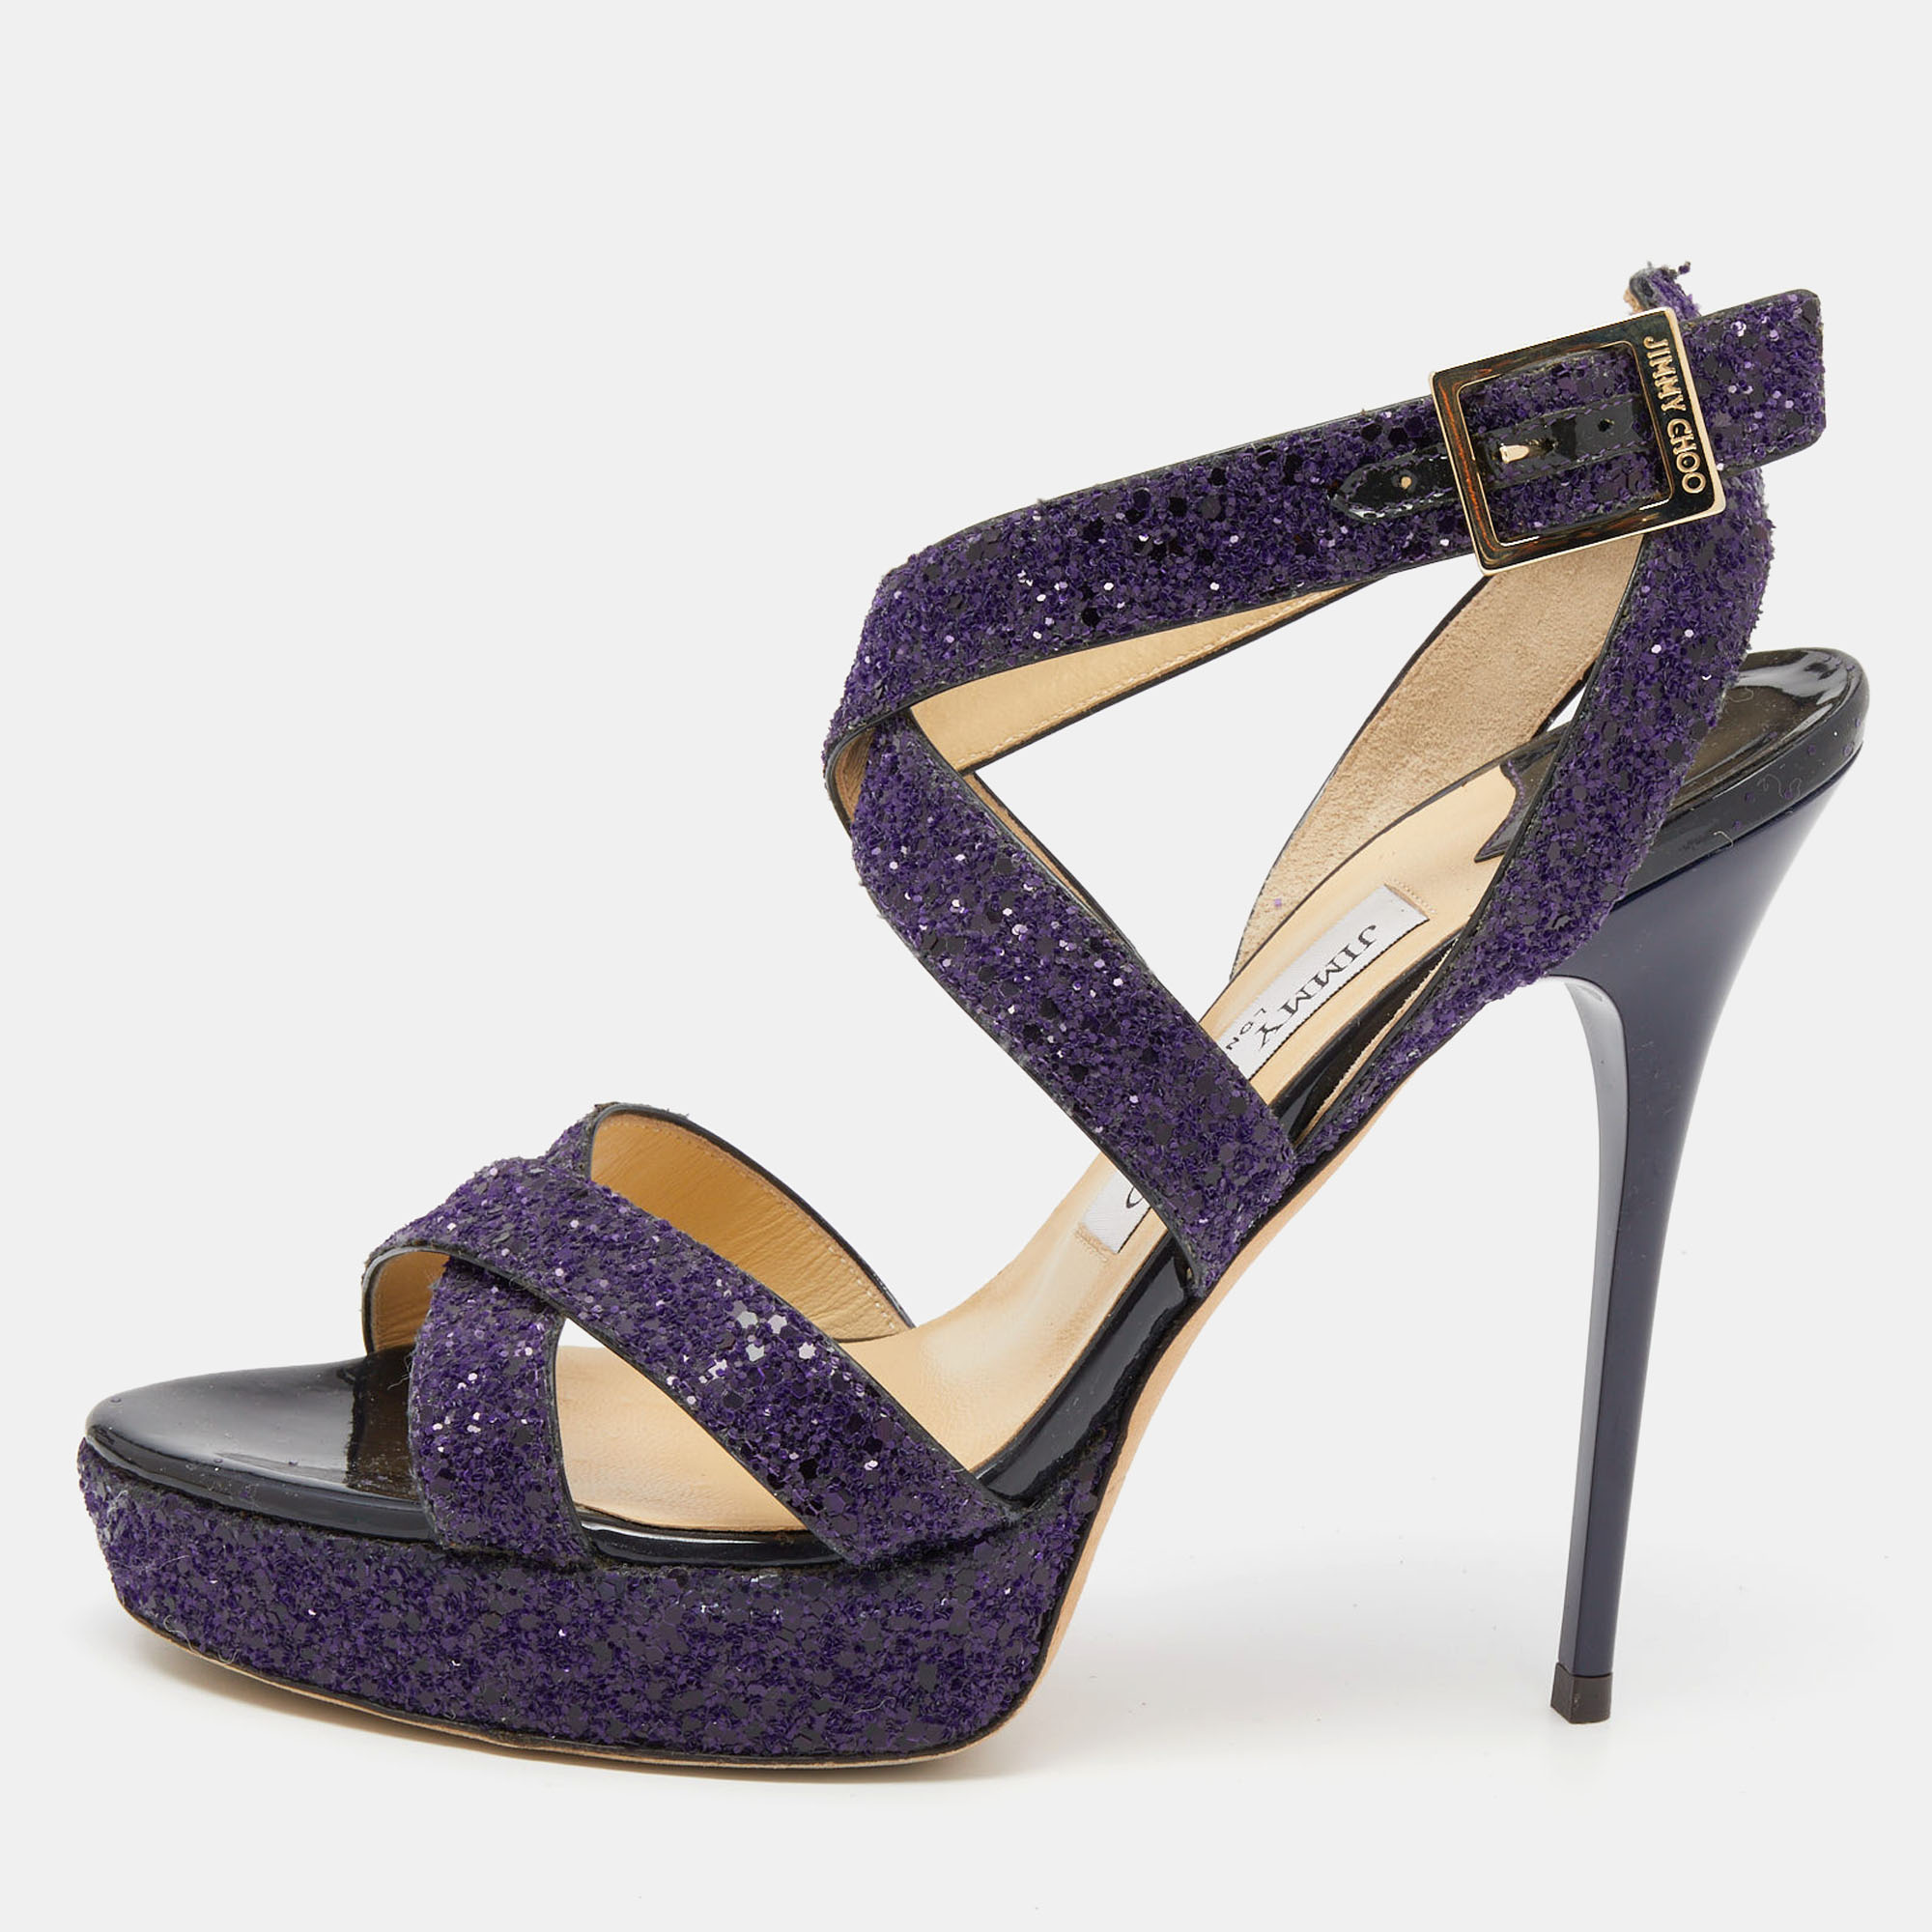 Jimmy choo purple glitter criss cross vamp platform sandals size 39